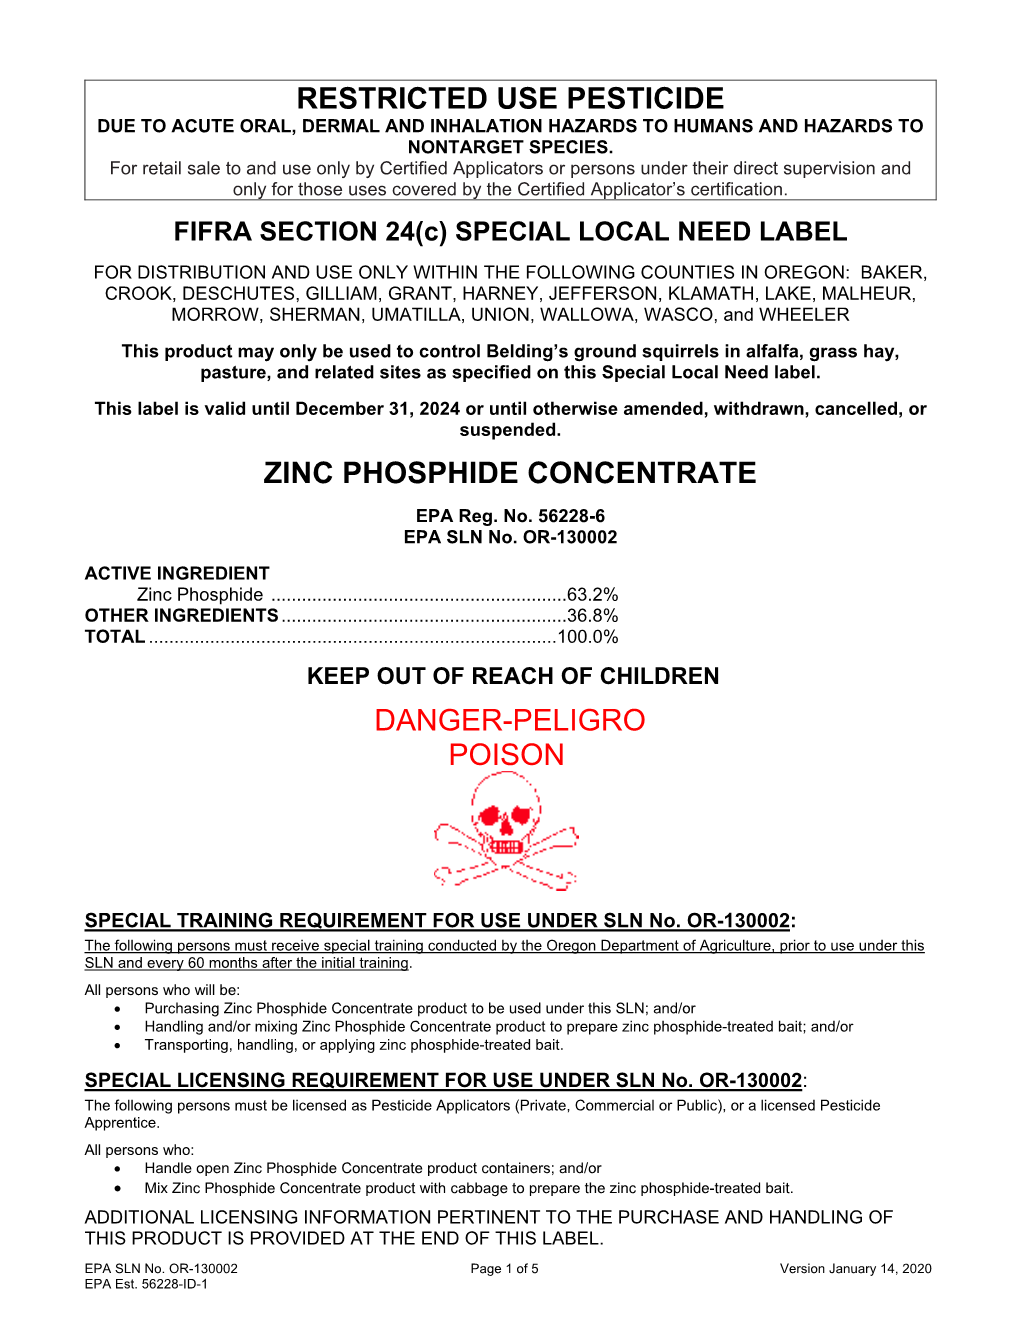 Restricted Use Pesticide Zinc Phosphide Concentrate